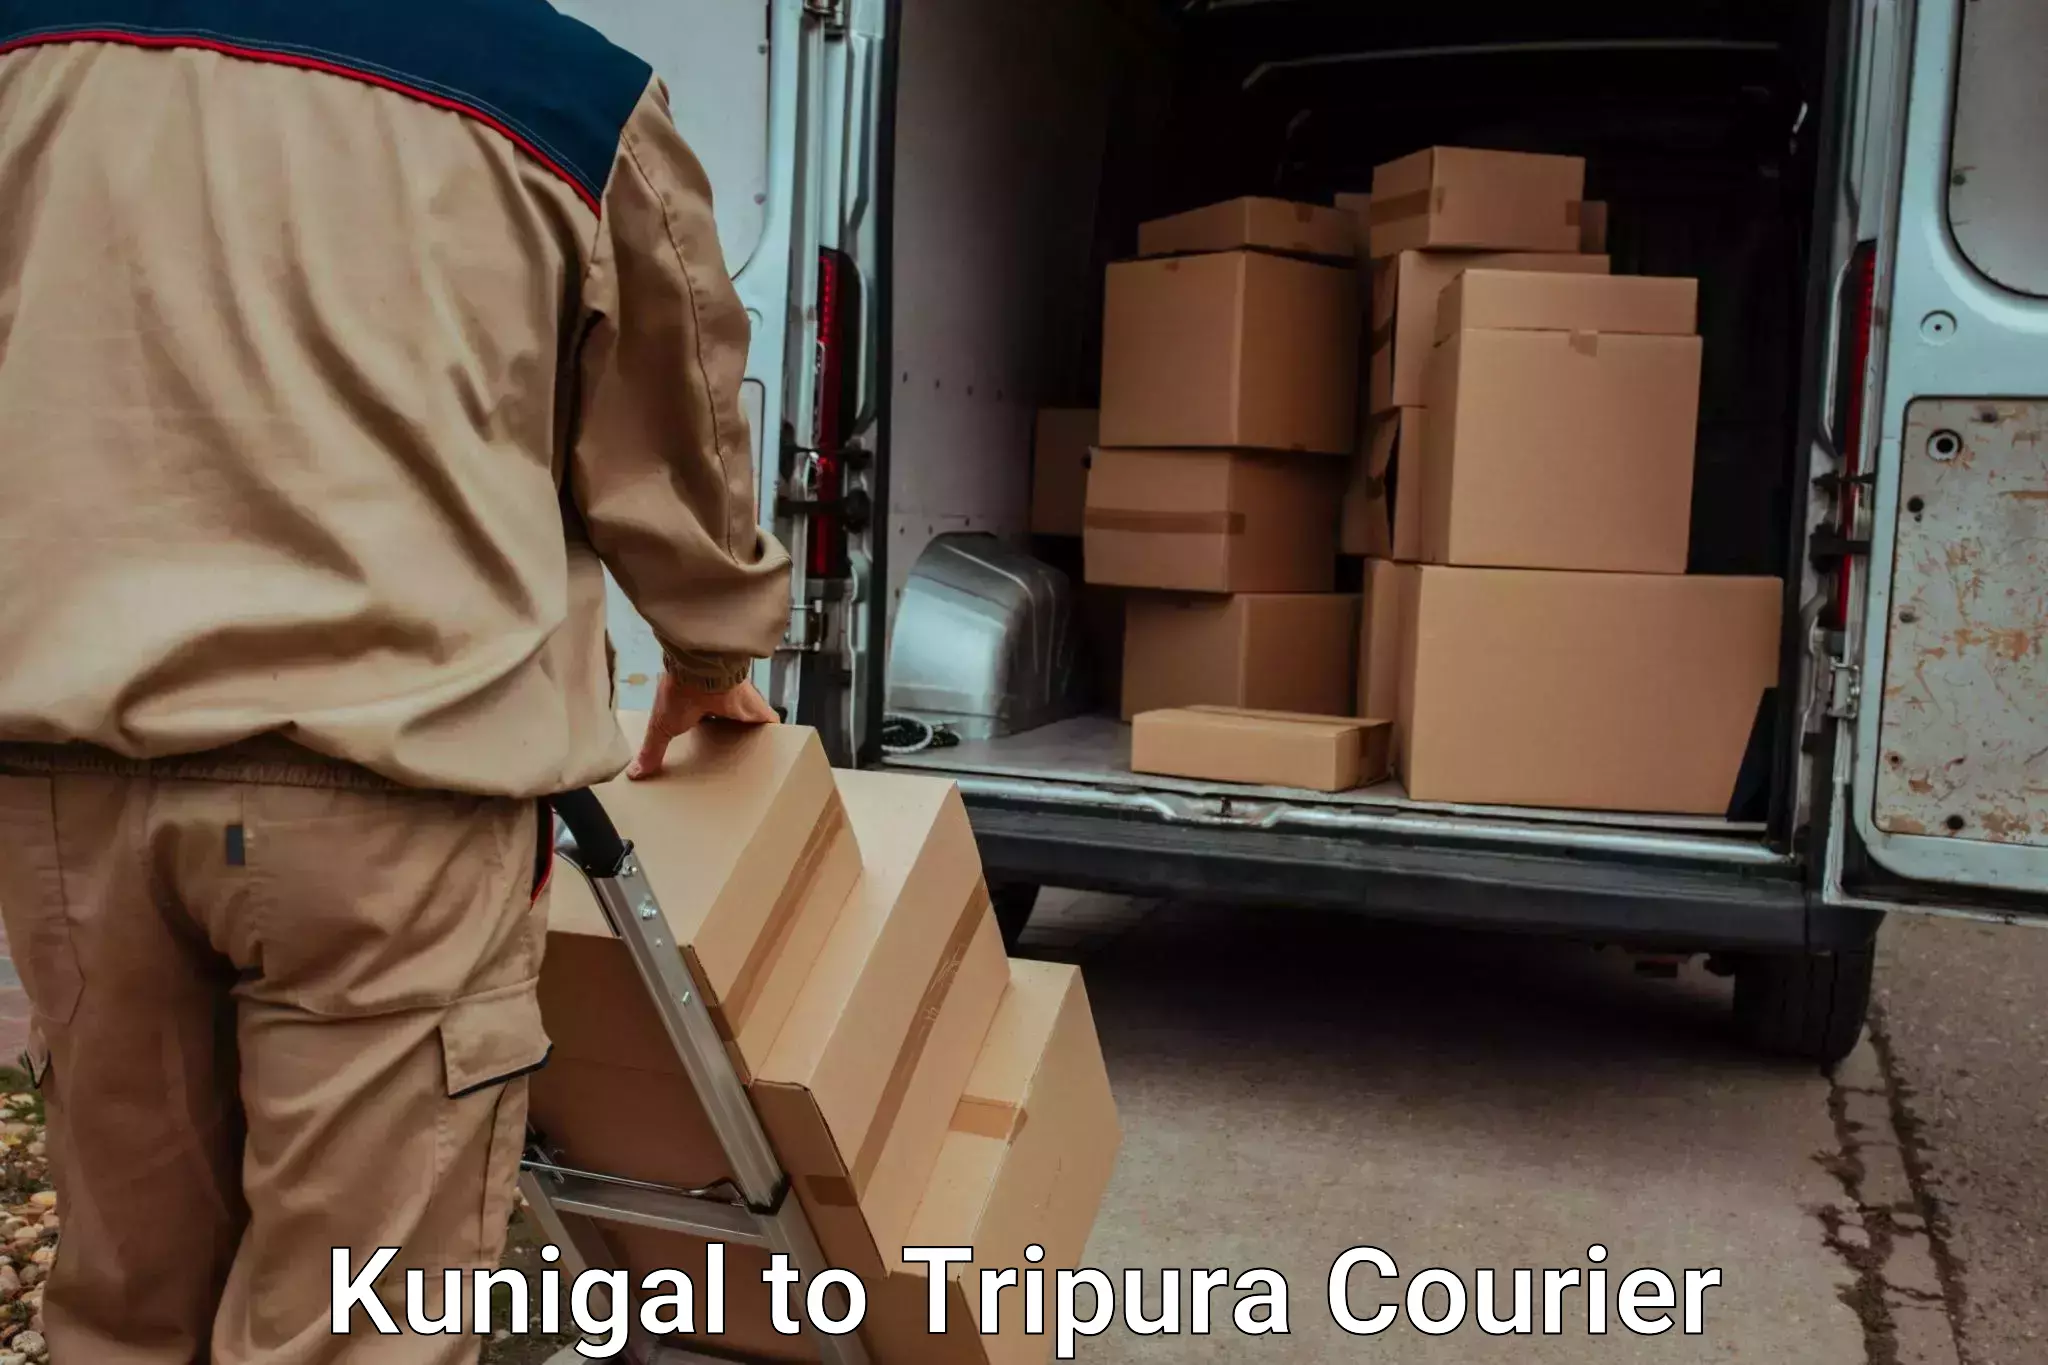 Urgent luggage shipment in Kunigal to Udaipur Tripura